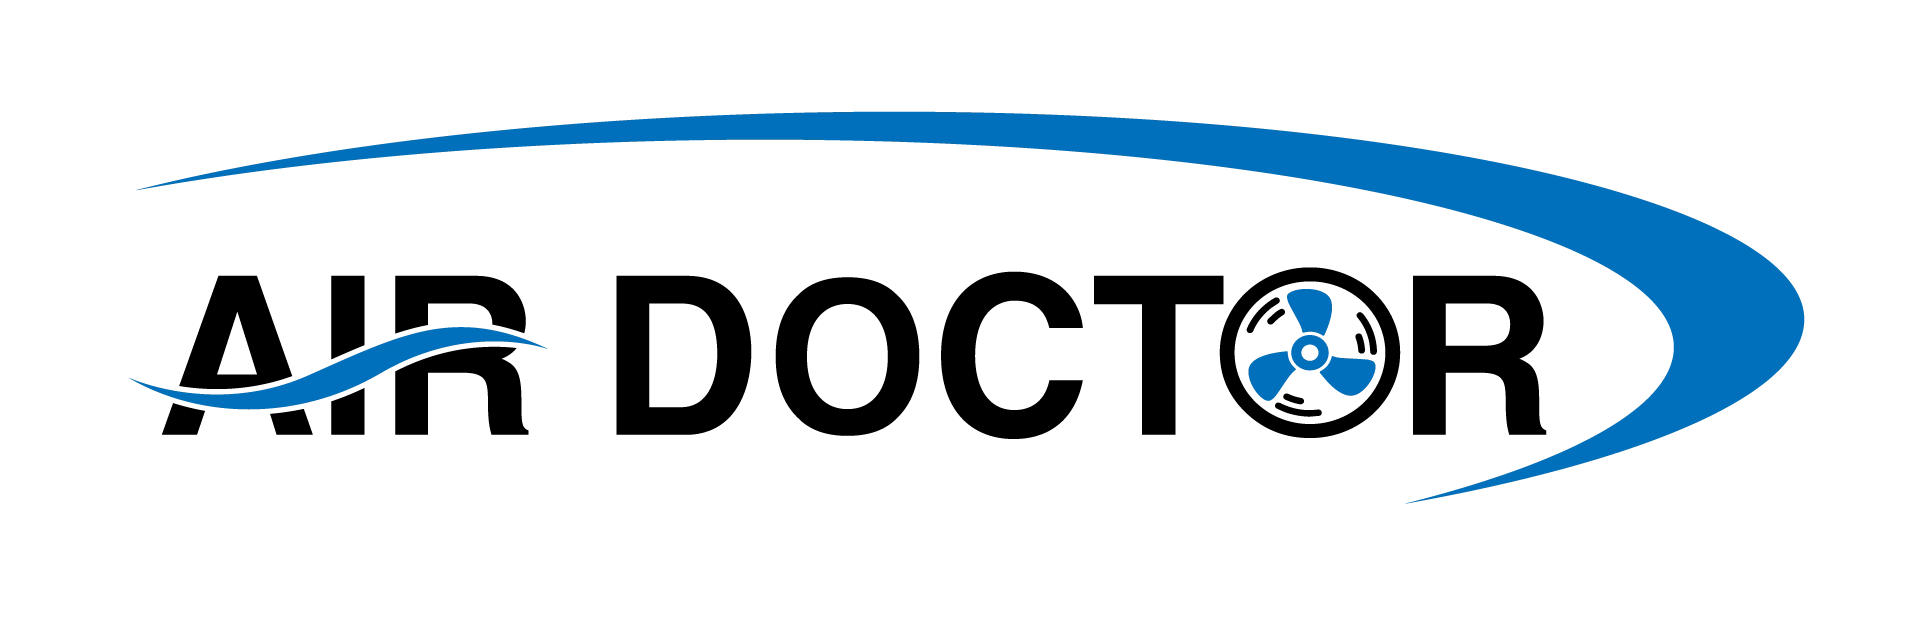 Air Doctor, Inc. Logo